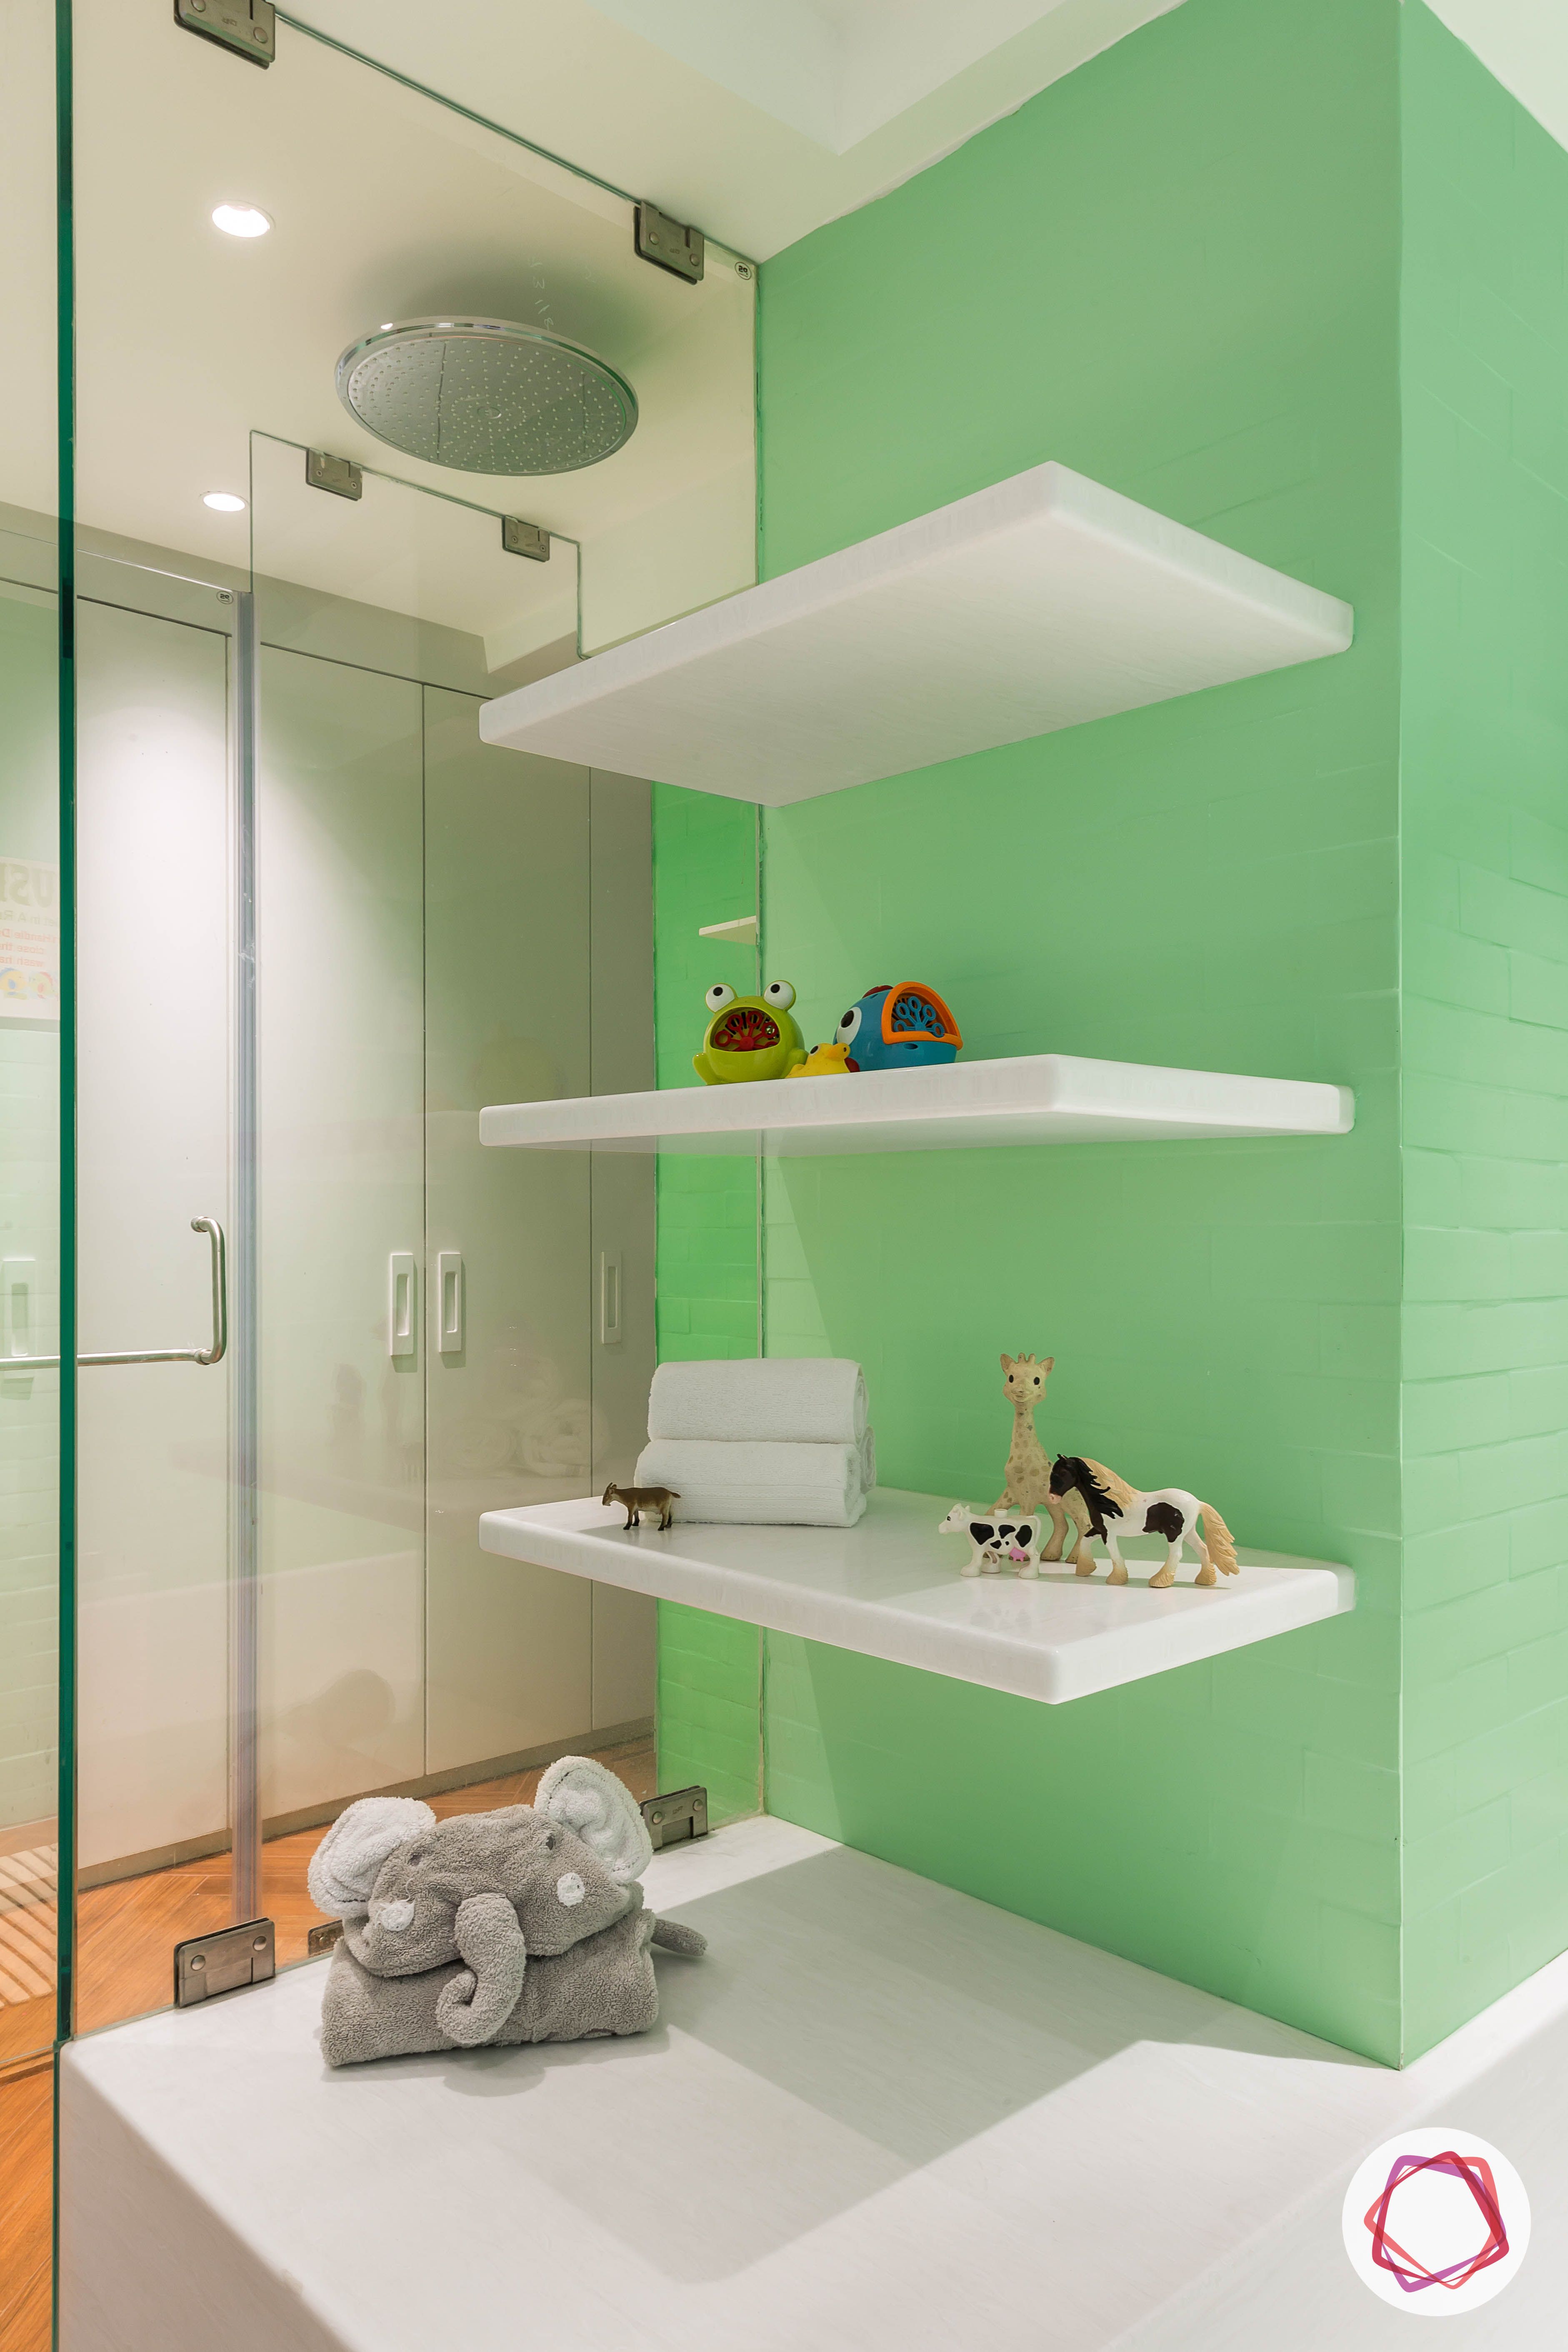 4bhk house plan-kids bathroom designs-green-wall-white-shelves